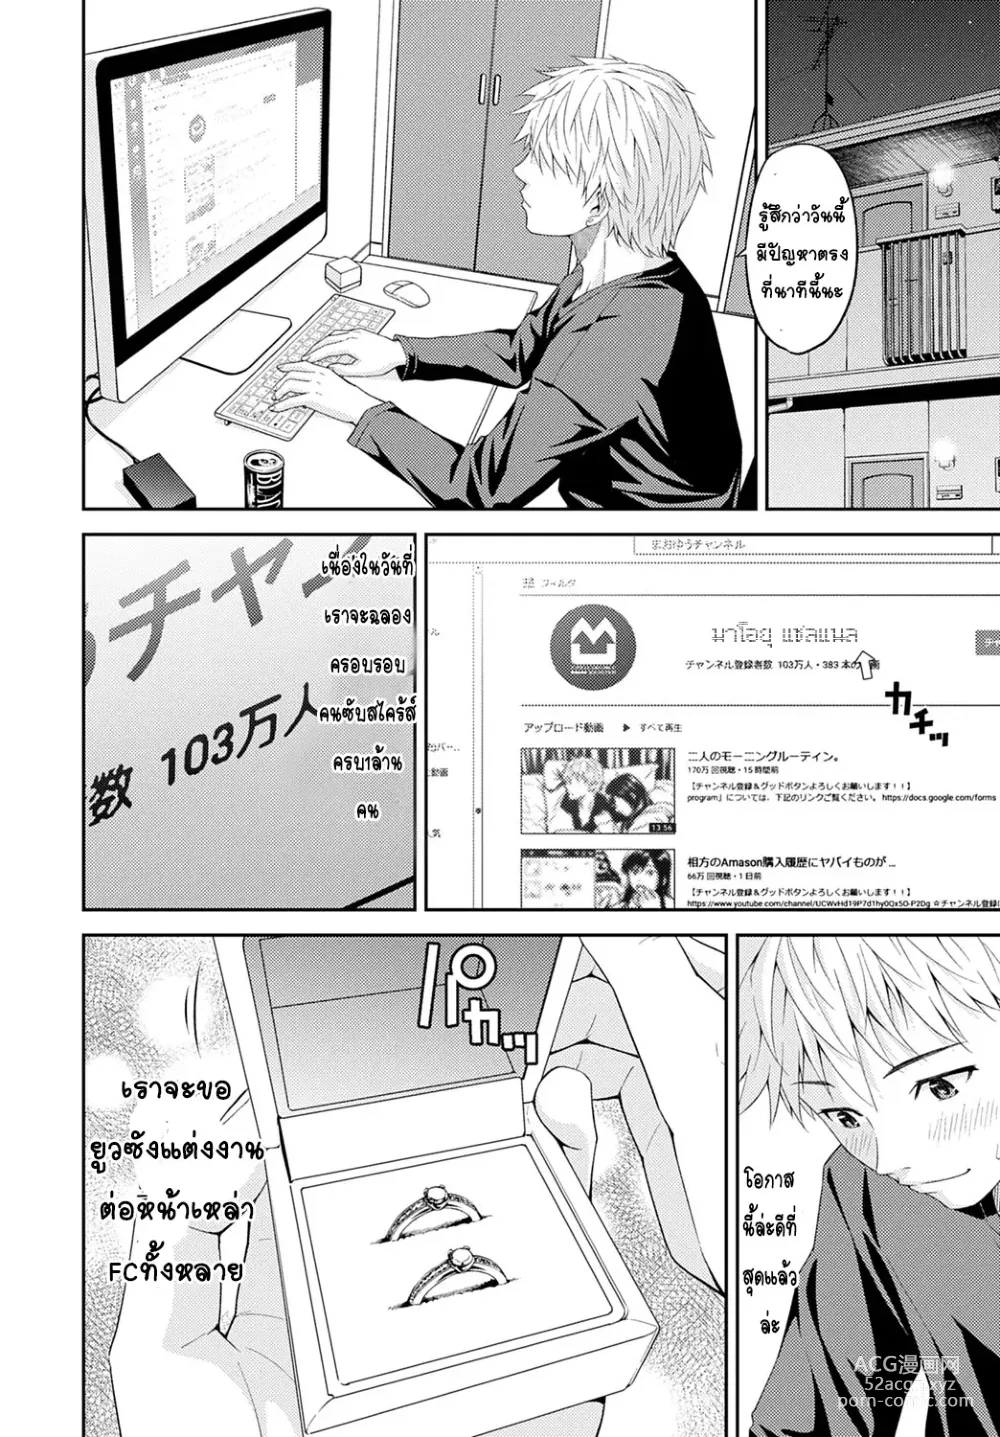 Page 4 of manga BSS Channel